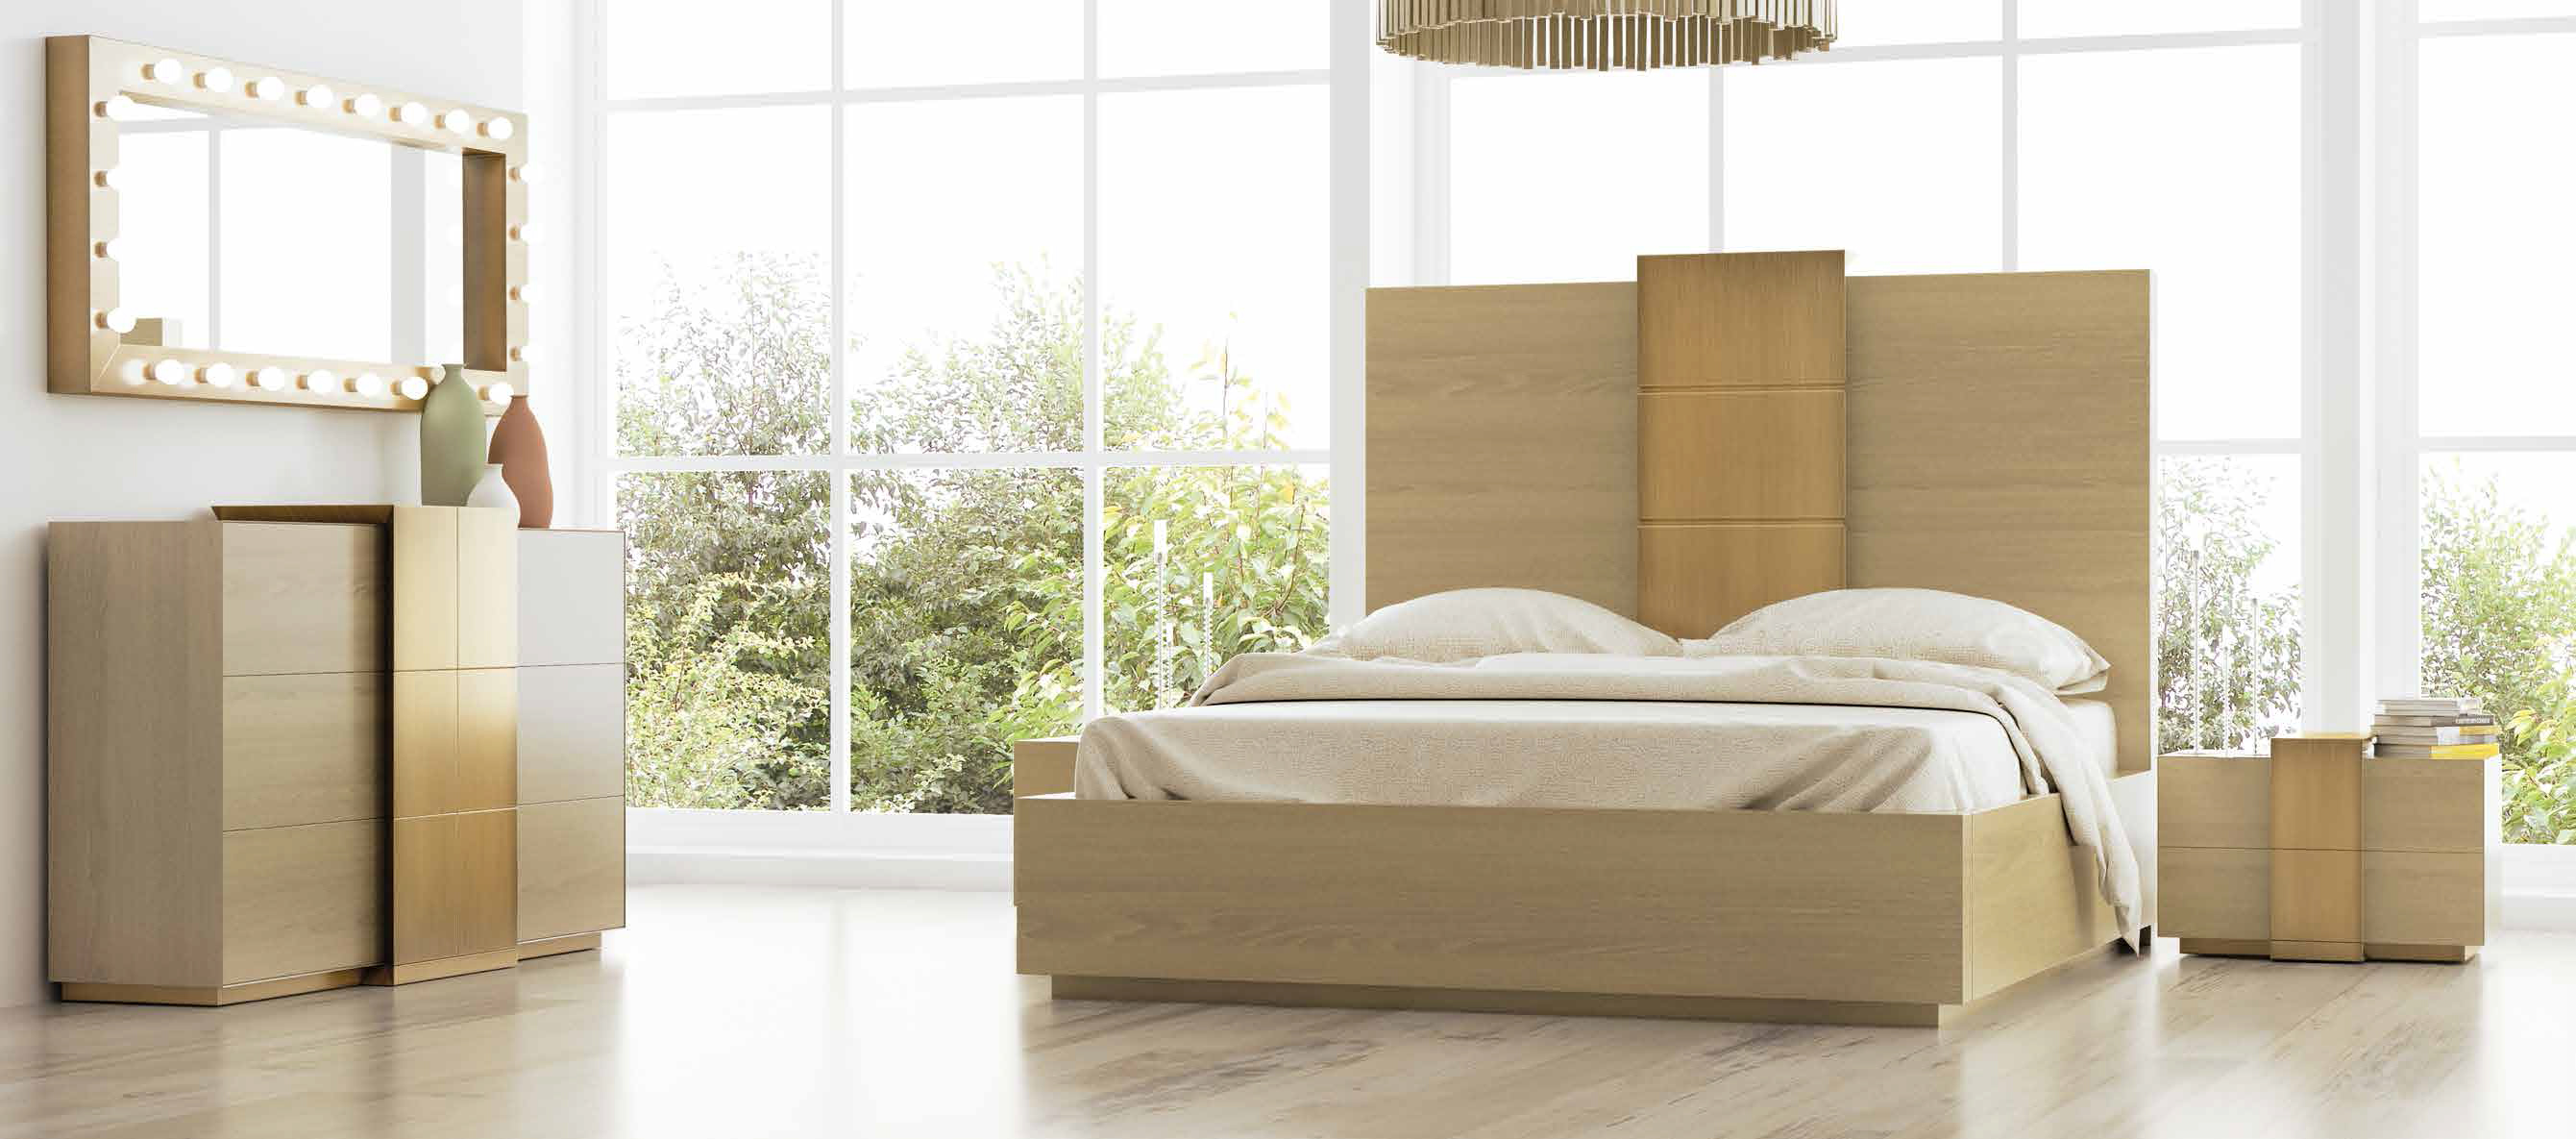 Brands Franco Furniture Bedrooms vol1, Spain DOR 10